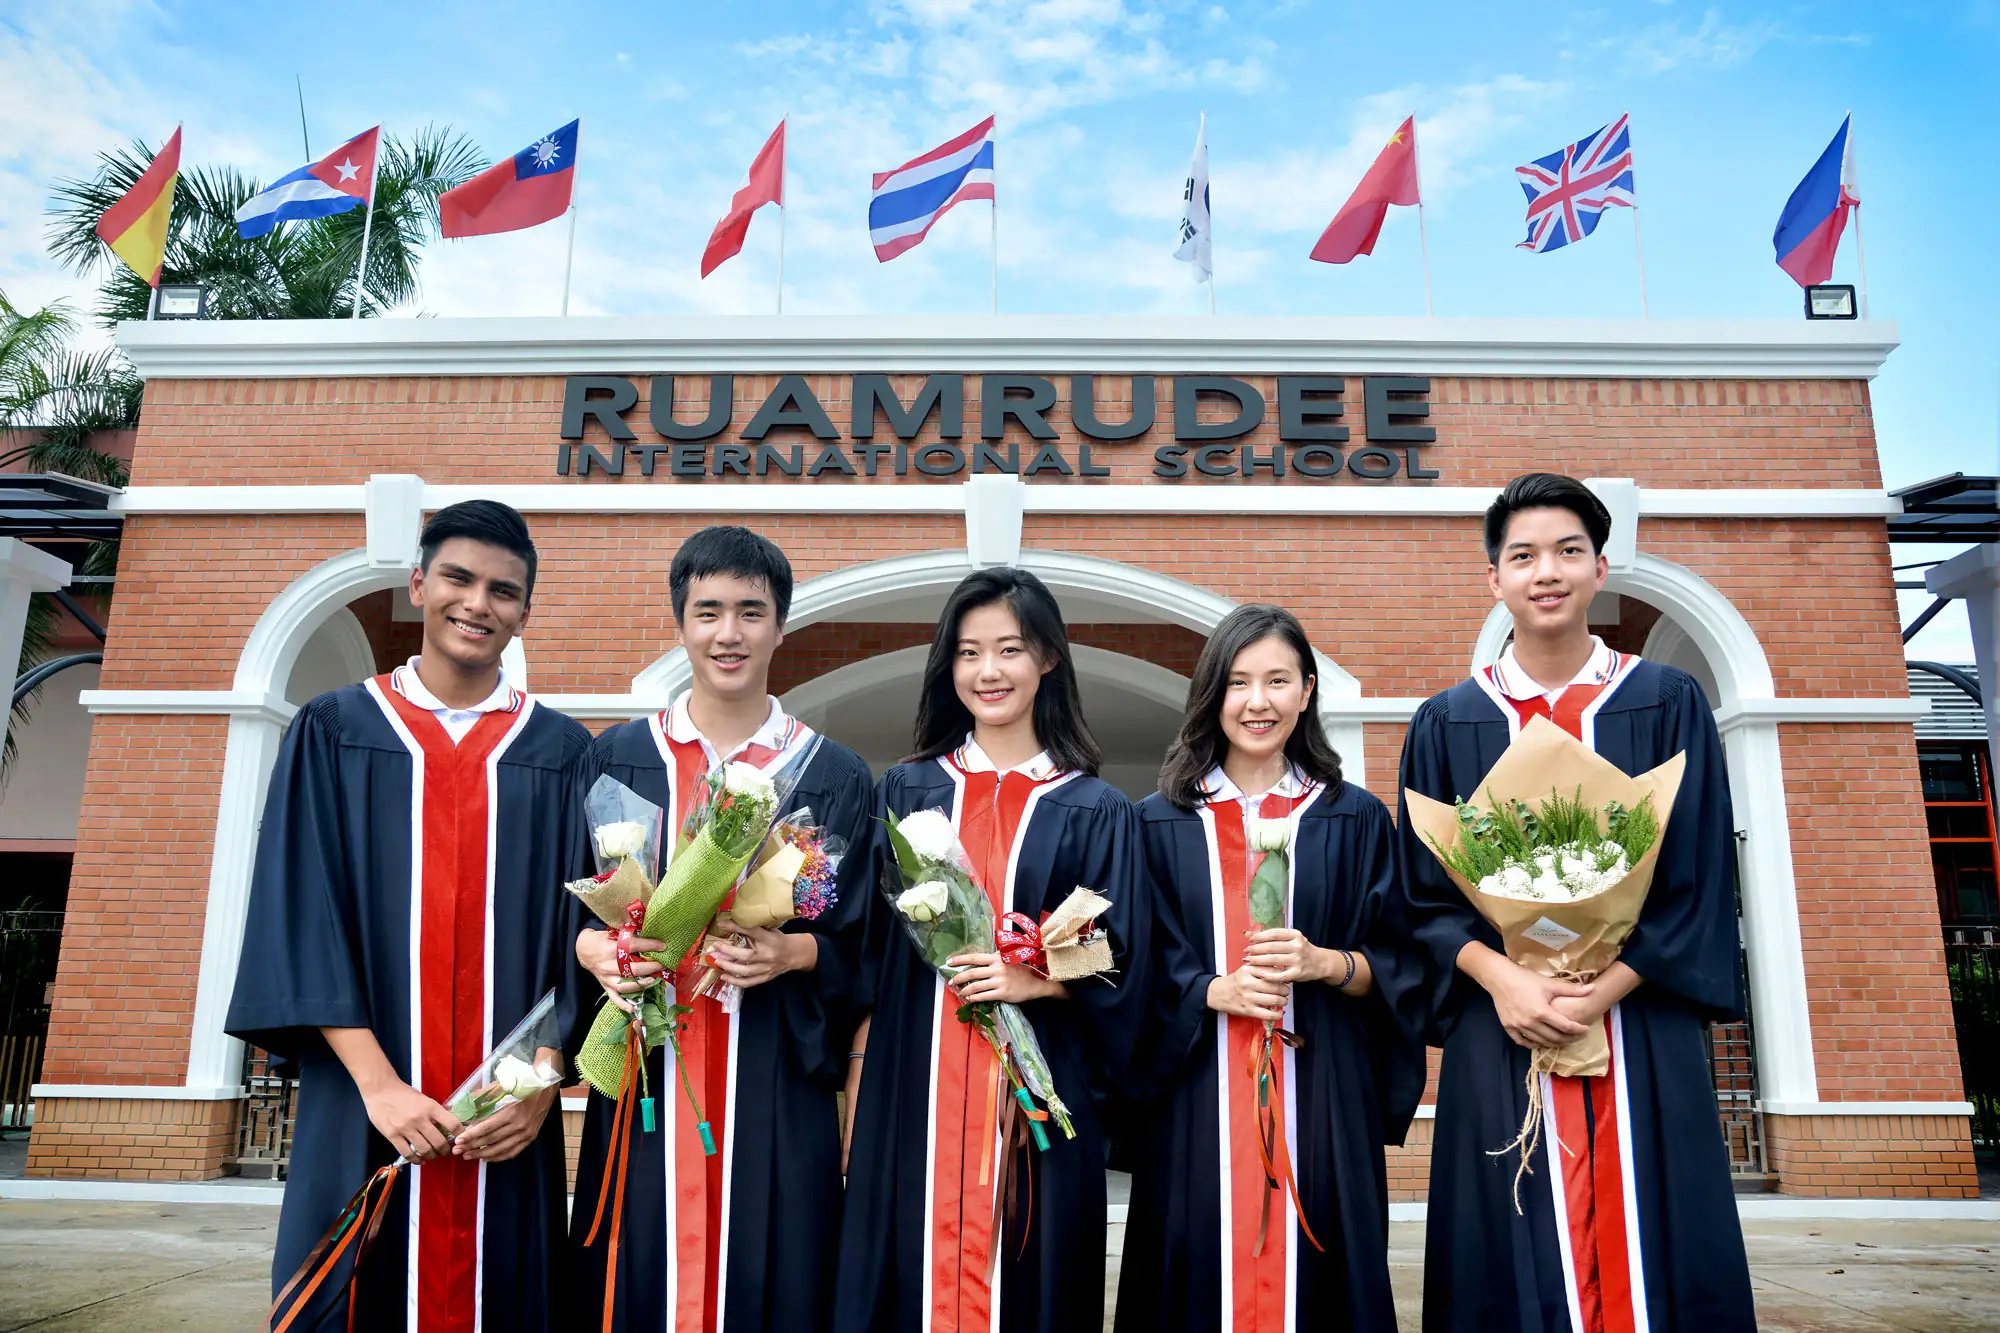 Ruamrudee International School 曼谷RIS 曼谷國際學校